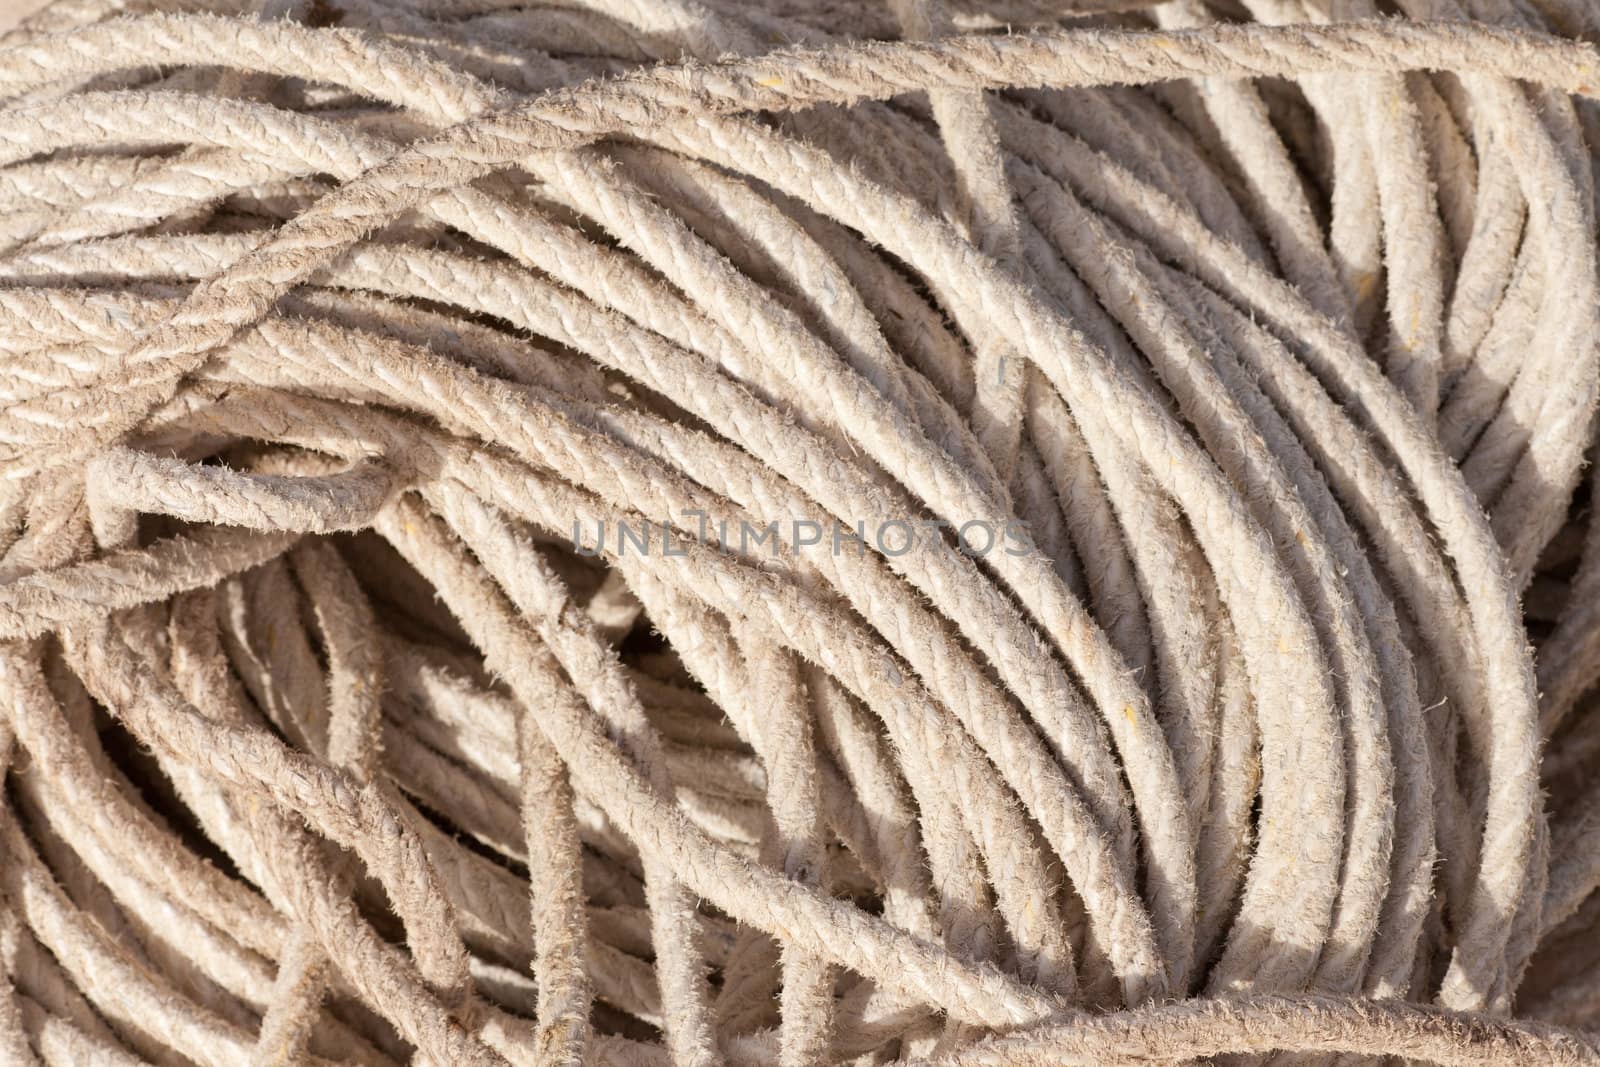 Hemp rope background by PiLens